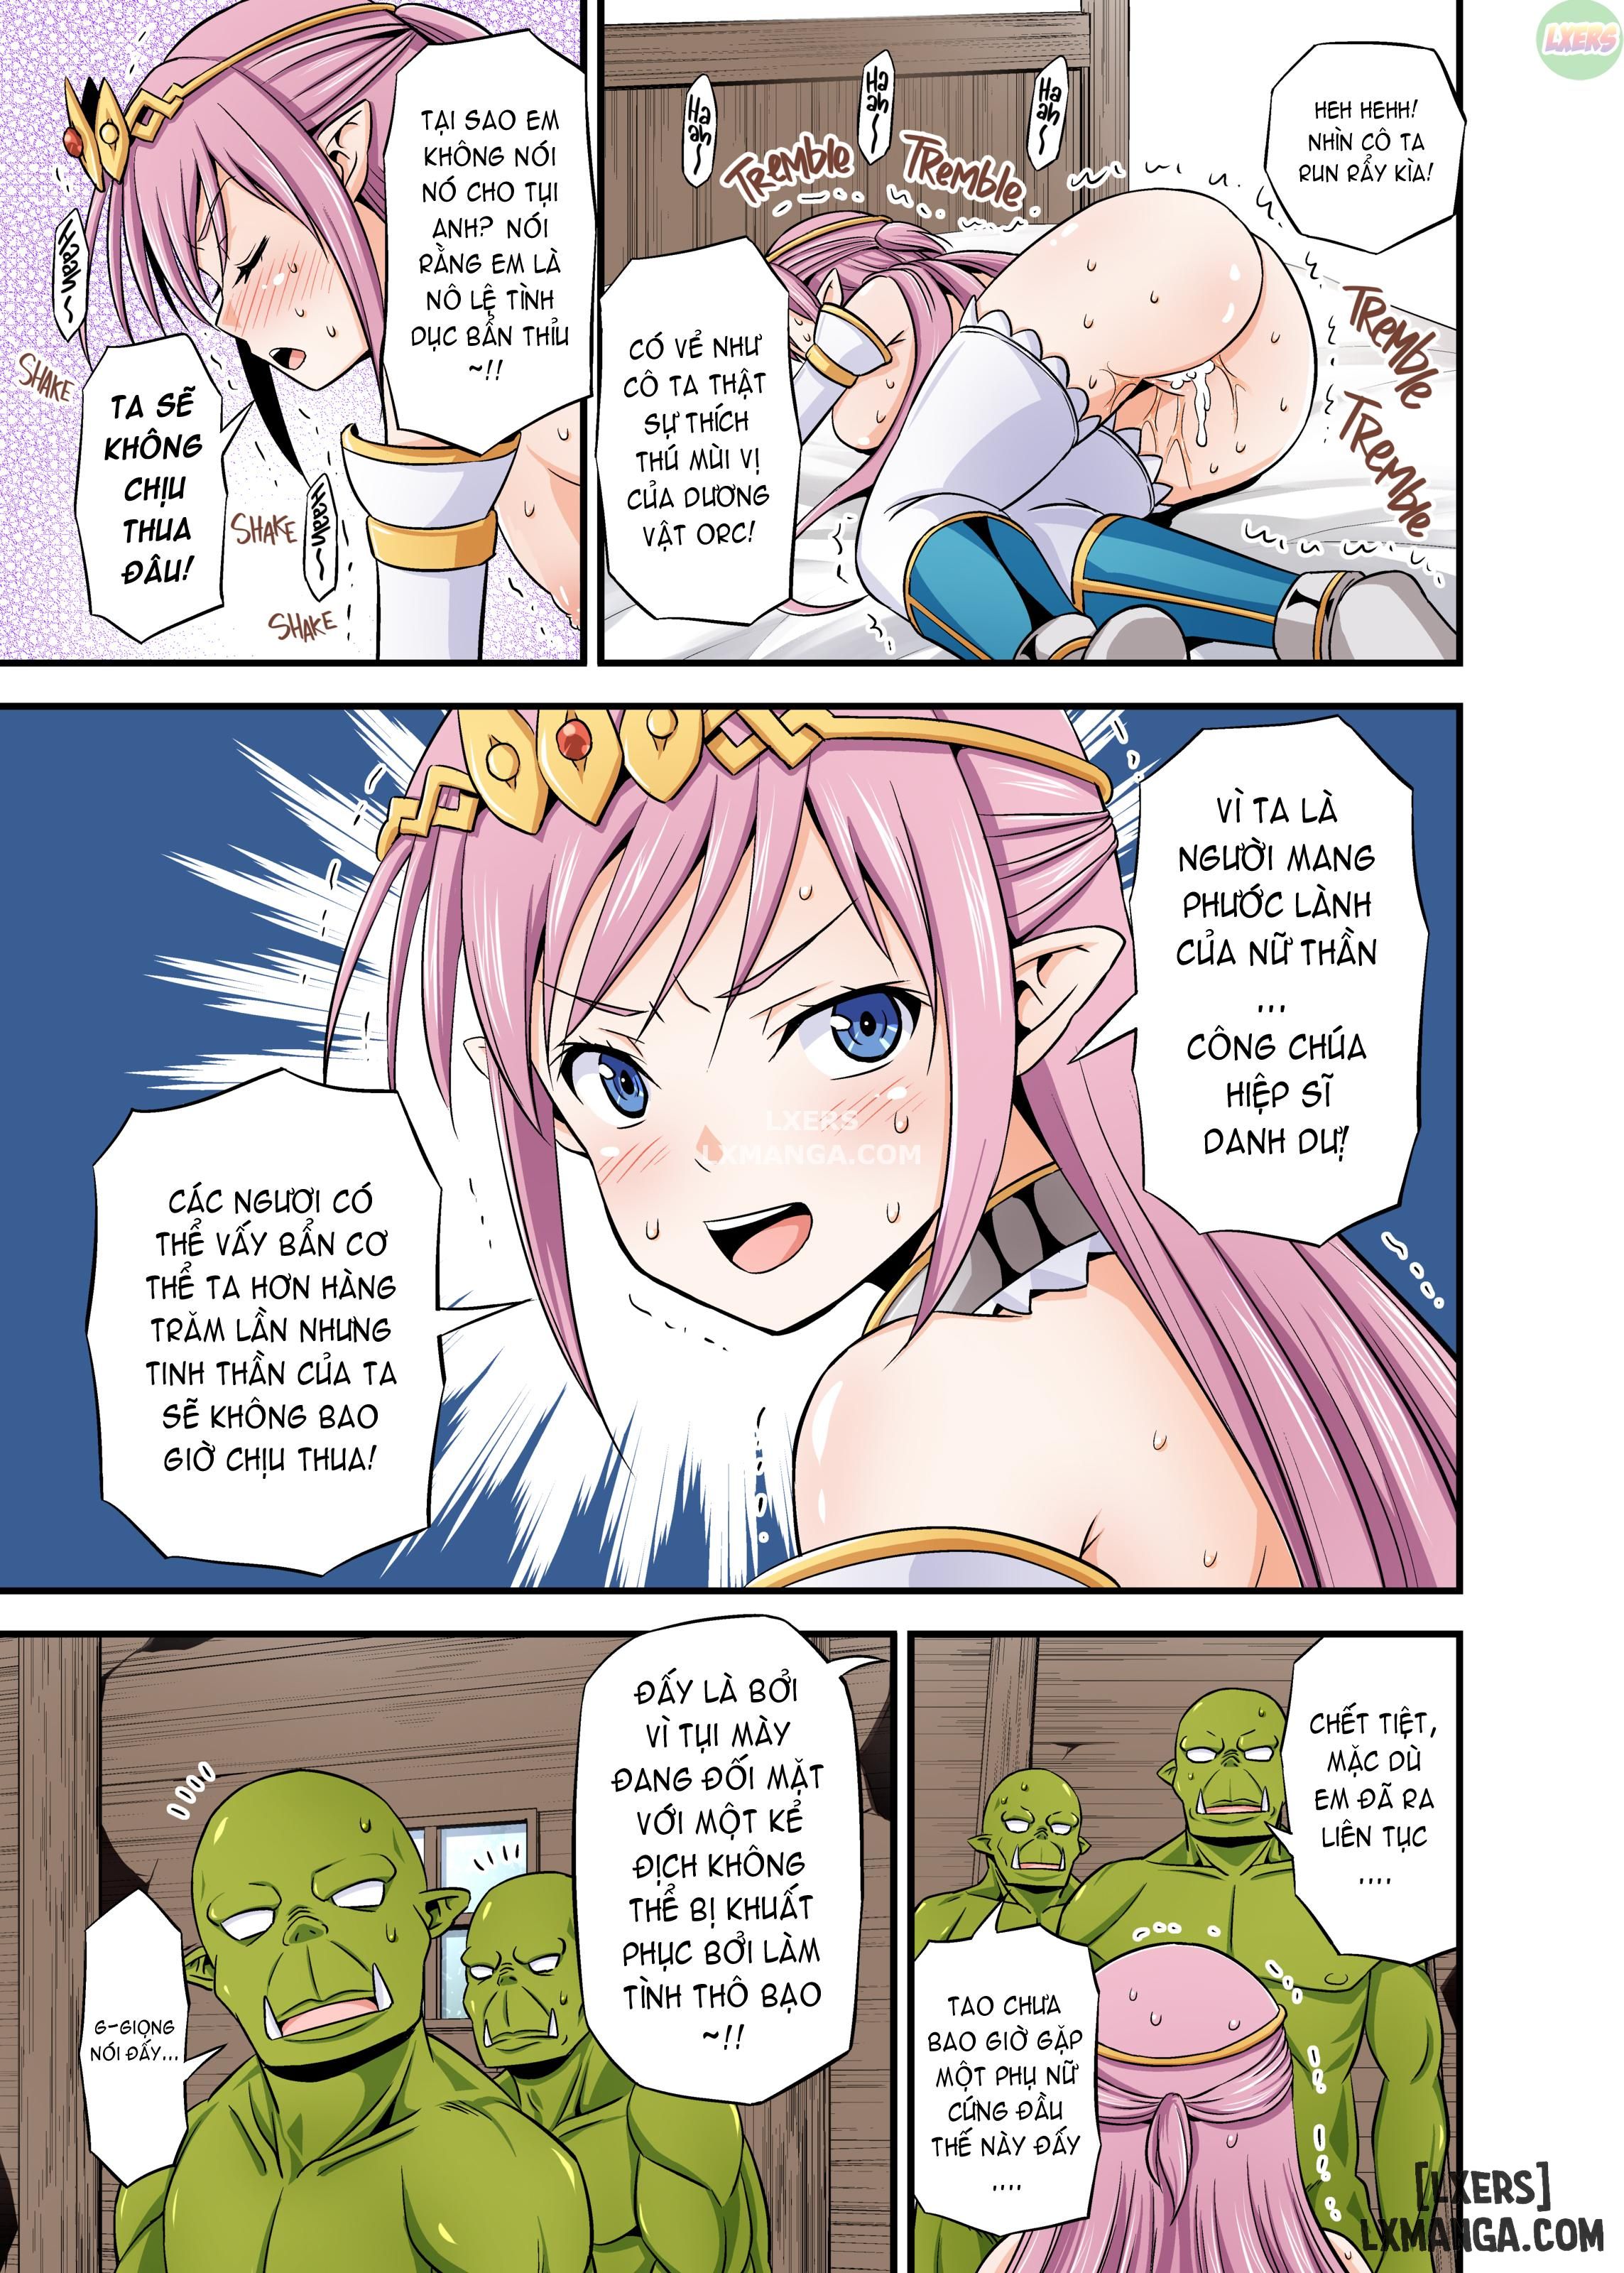 The Obstinate Elf Knight Princess VS The Orc's Ultimate Female Subjugation Squad Chương Oneshot Trang 9